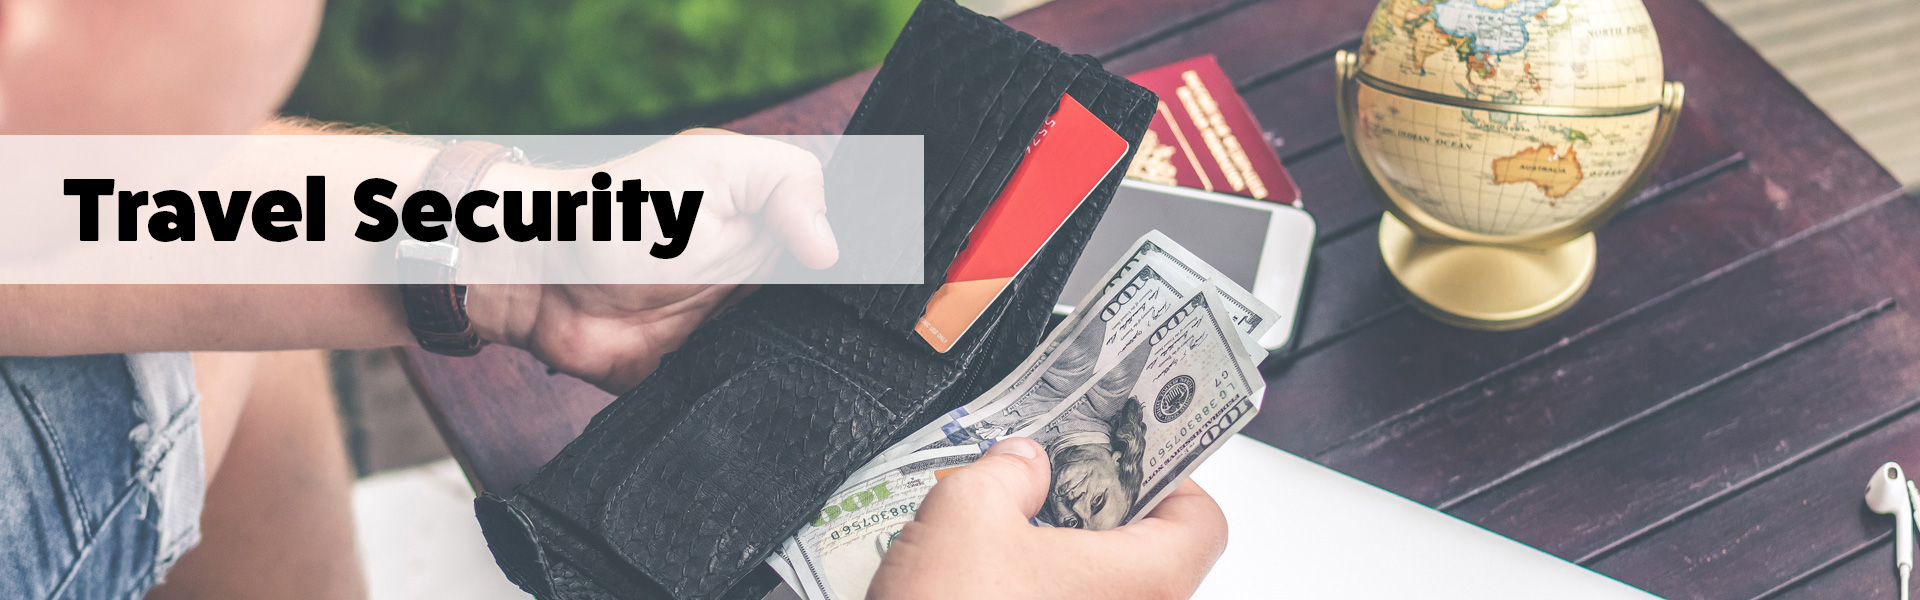 Travel Wallet Keeps Money Cards Passport Safe.